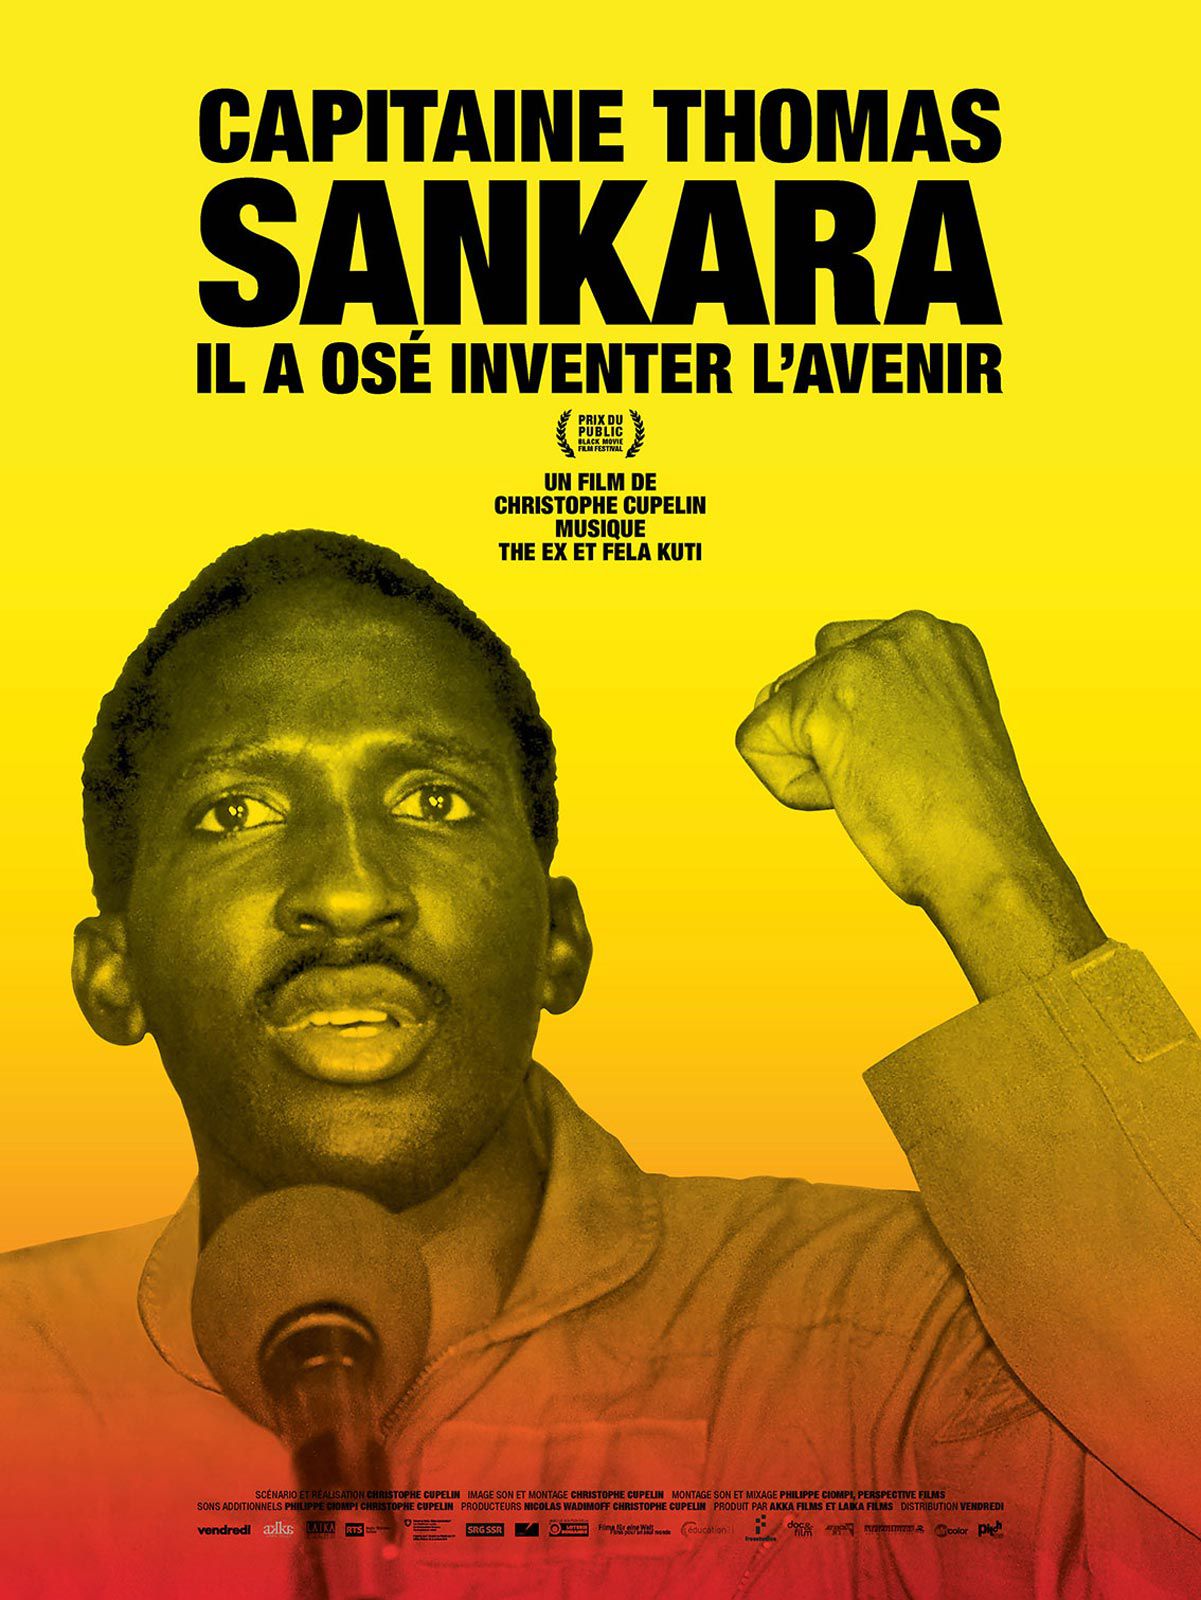 Capitaine Thomas Sankara - Documentaire (2015) streaming VF gratuit complet